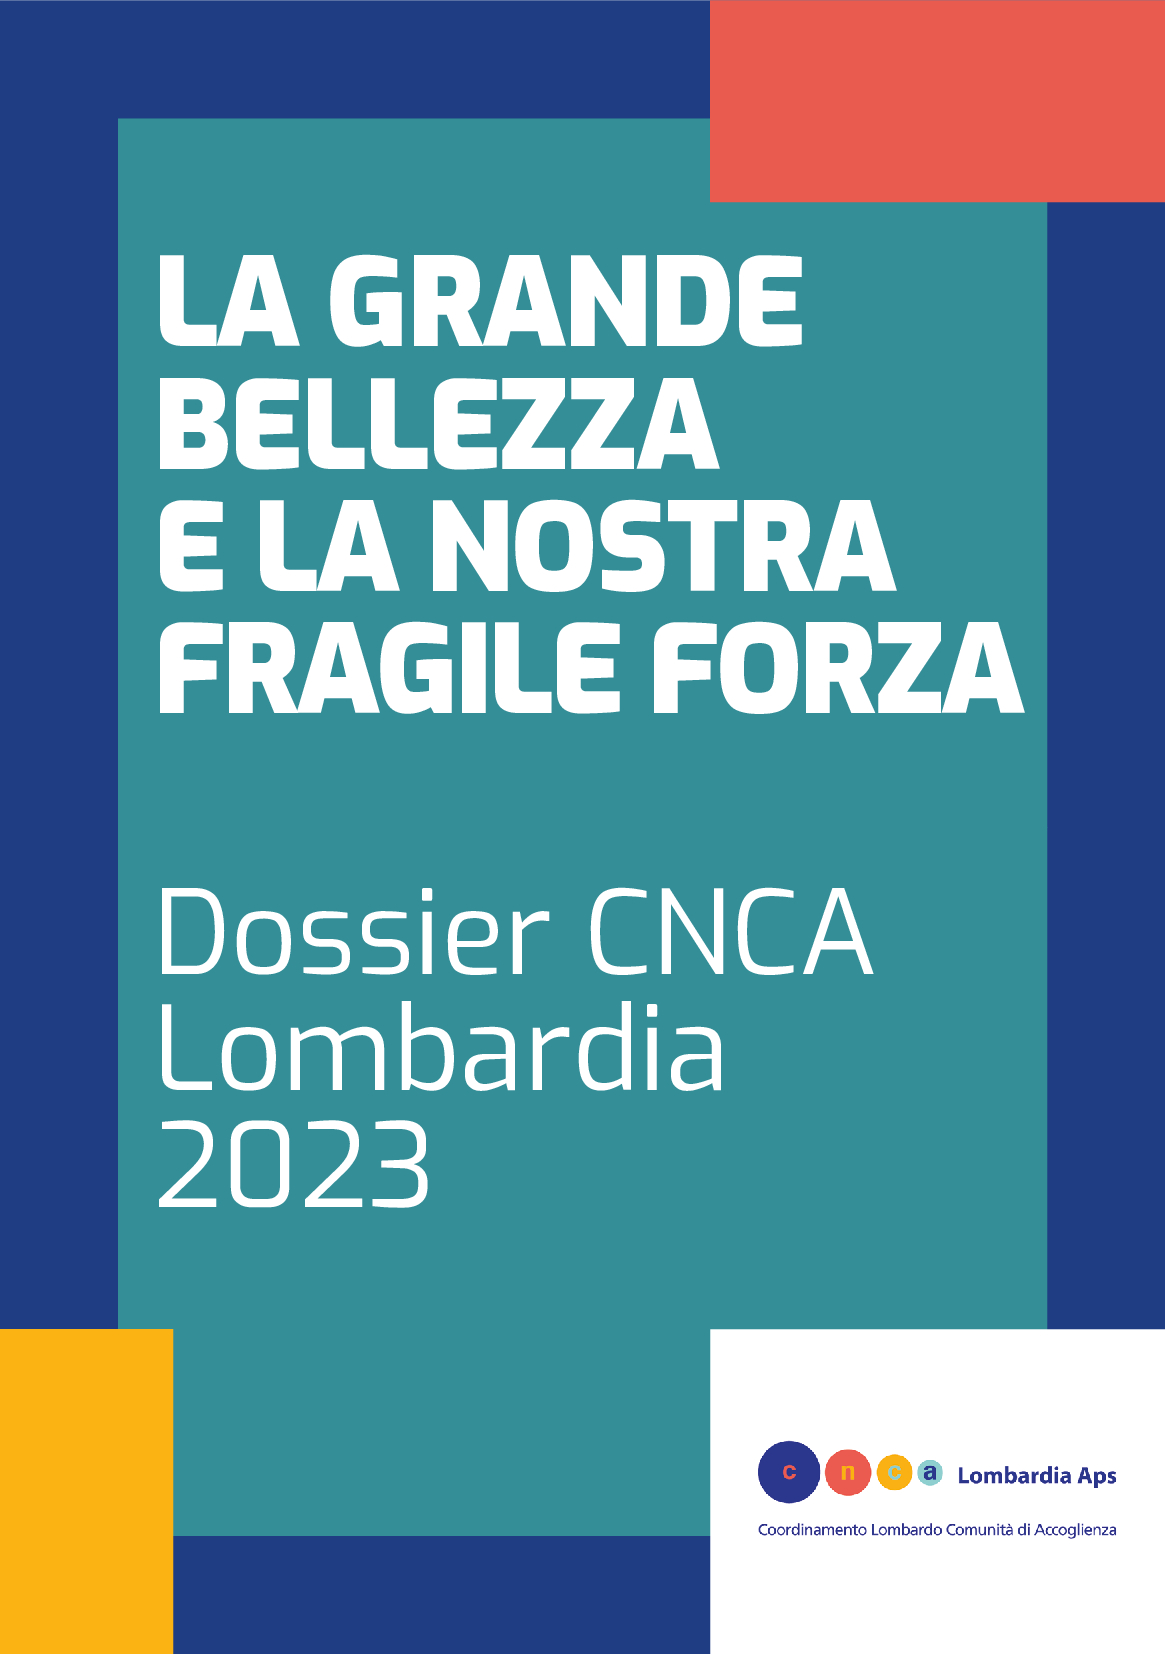 Dossier CNCA 2022